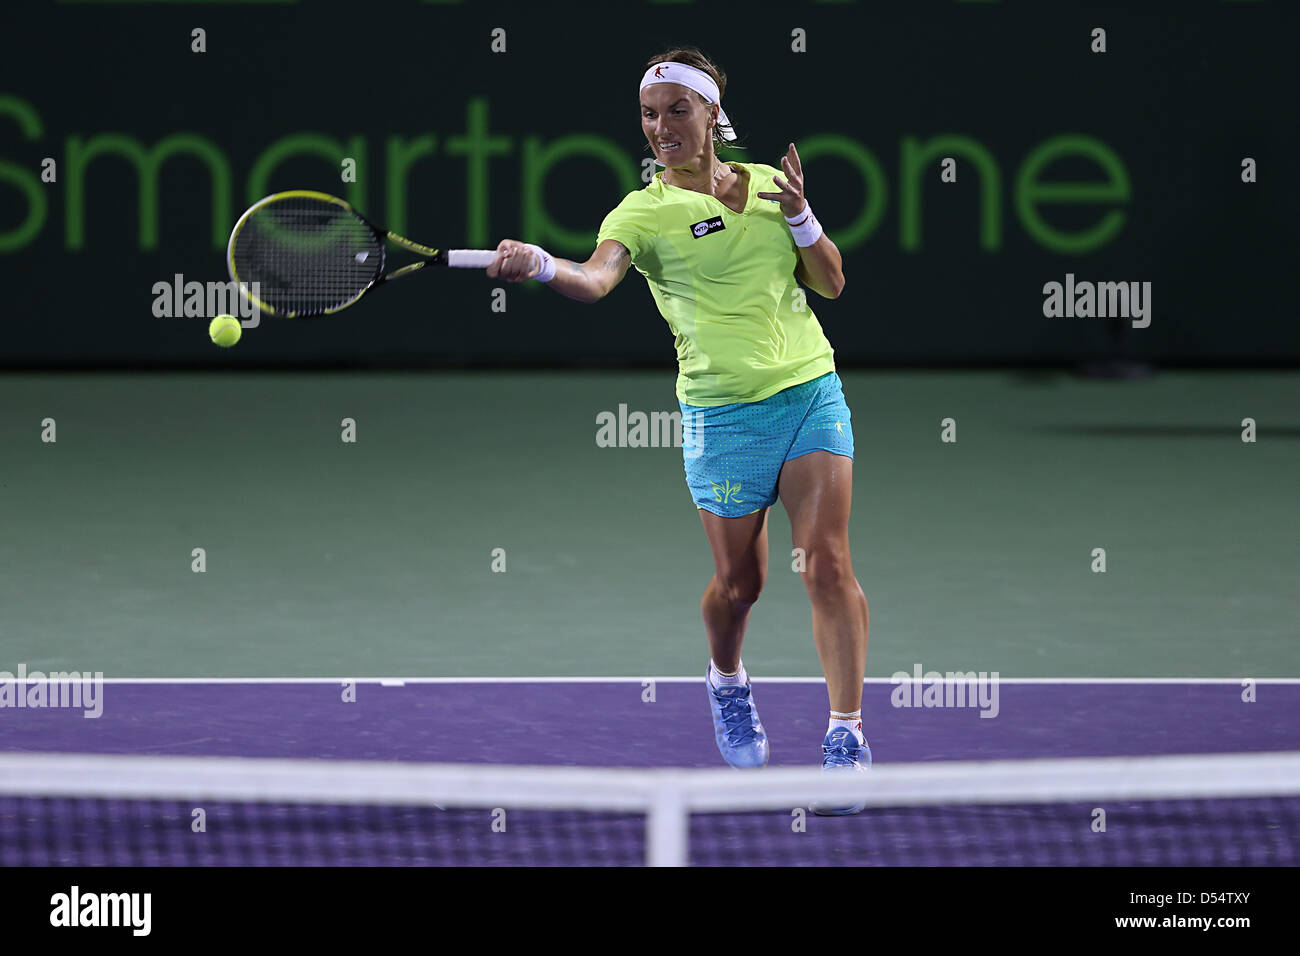 Miami, Florida, USA. 24th March 2013. Svetlana Kuznetsova of Russia in action during the Sony Open 2013. Credit:  Mauricio Paiz / Alamy Live News Stock Photo